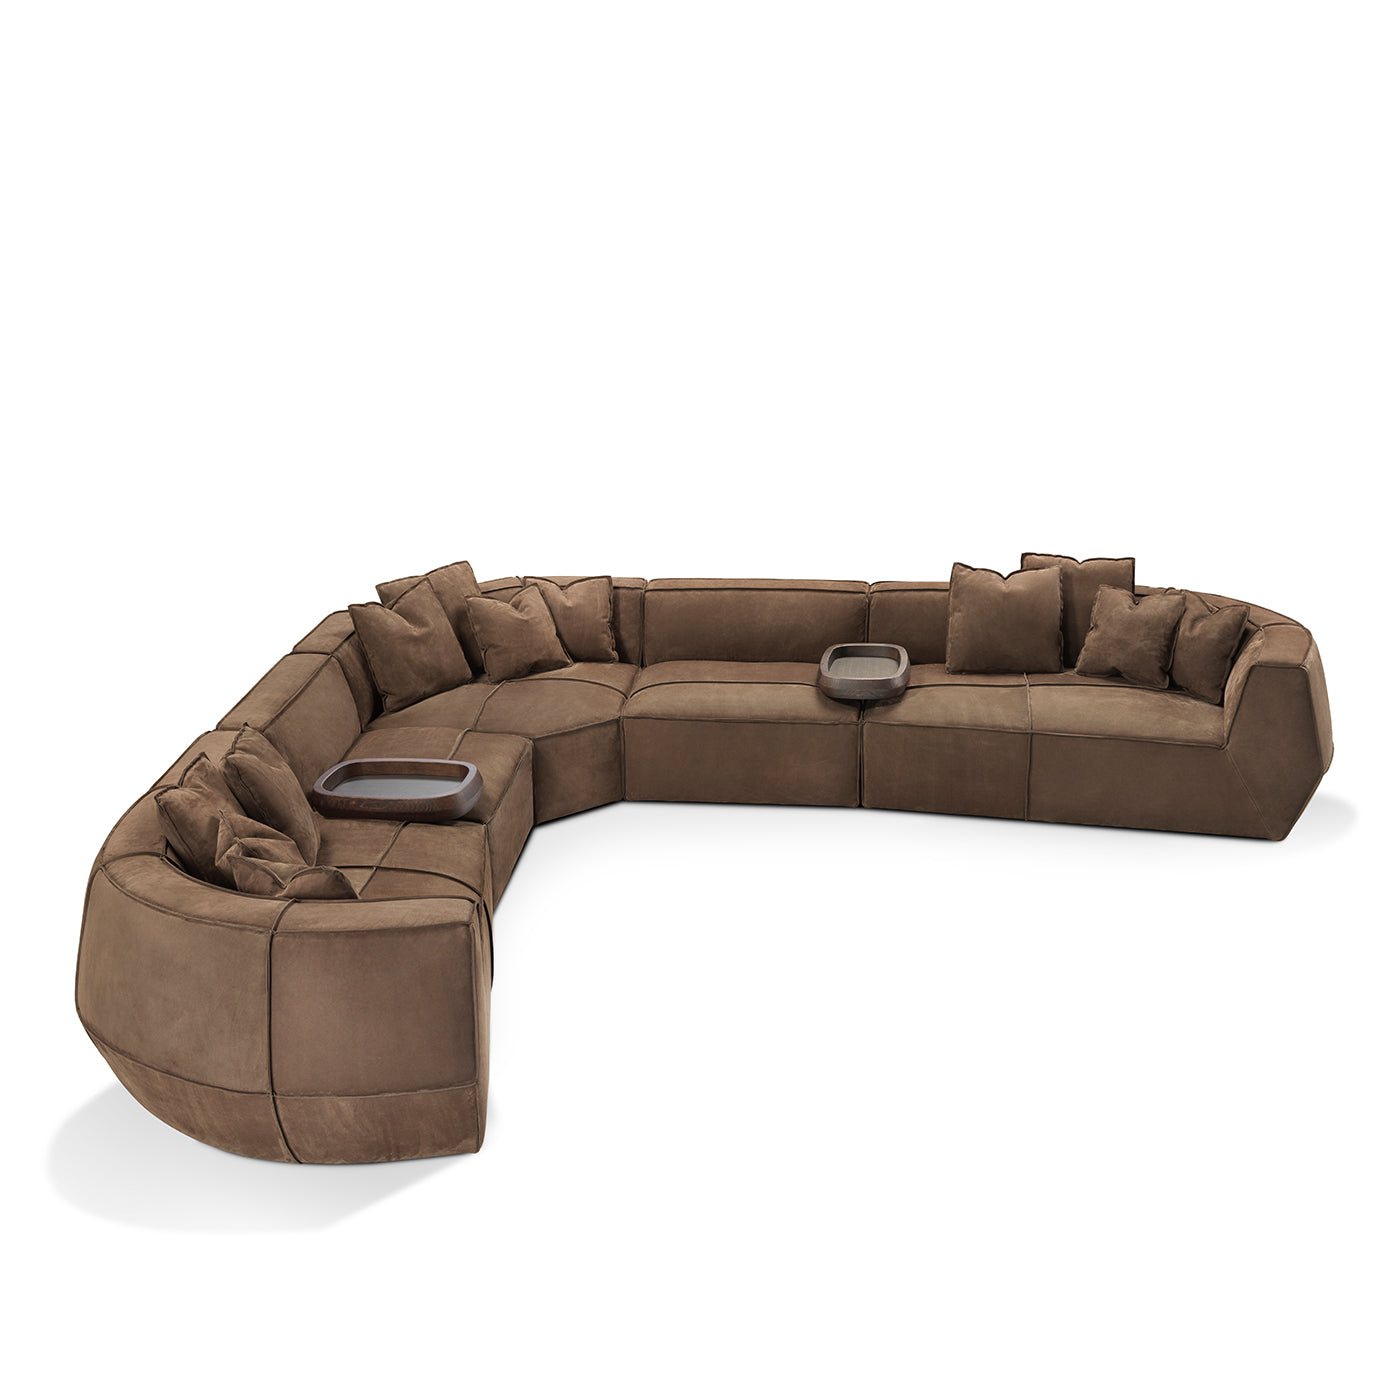 Infinito Brown Leather Sofa by Lorenza Bozzoli - Alternative view 3